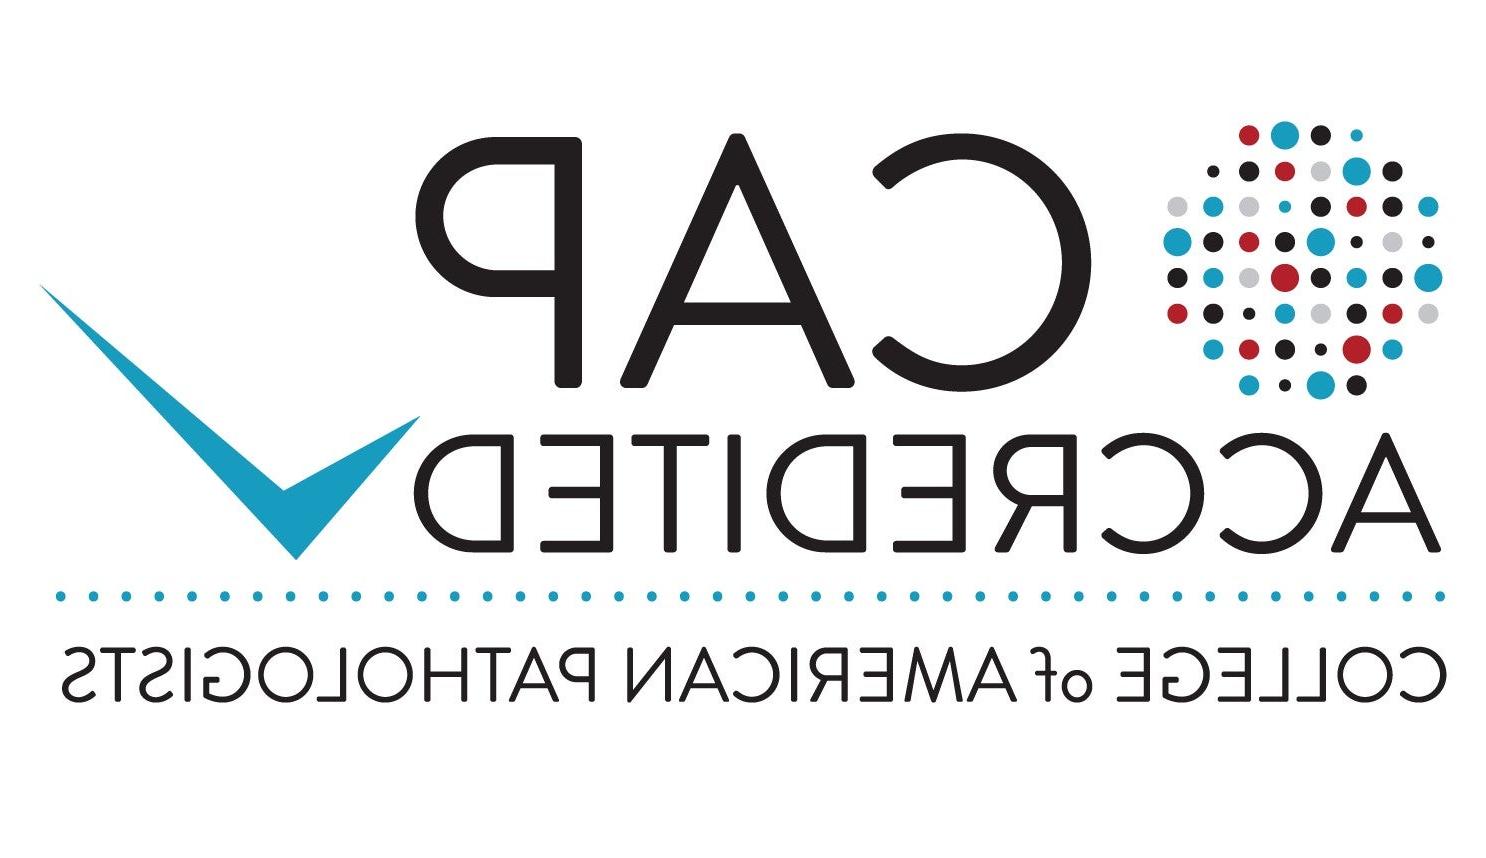 CAP Accreditation logo